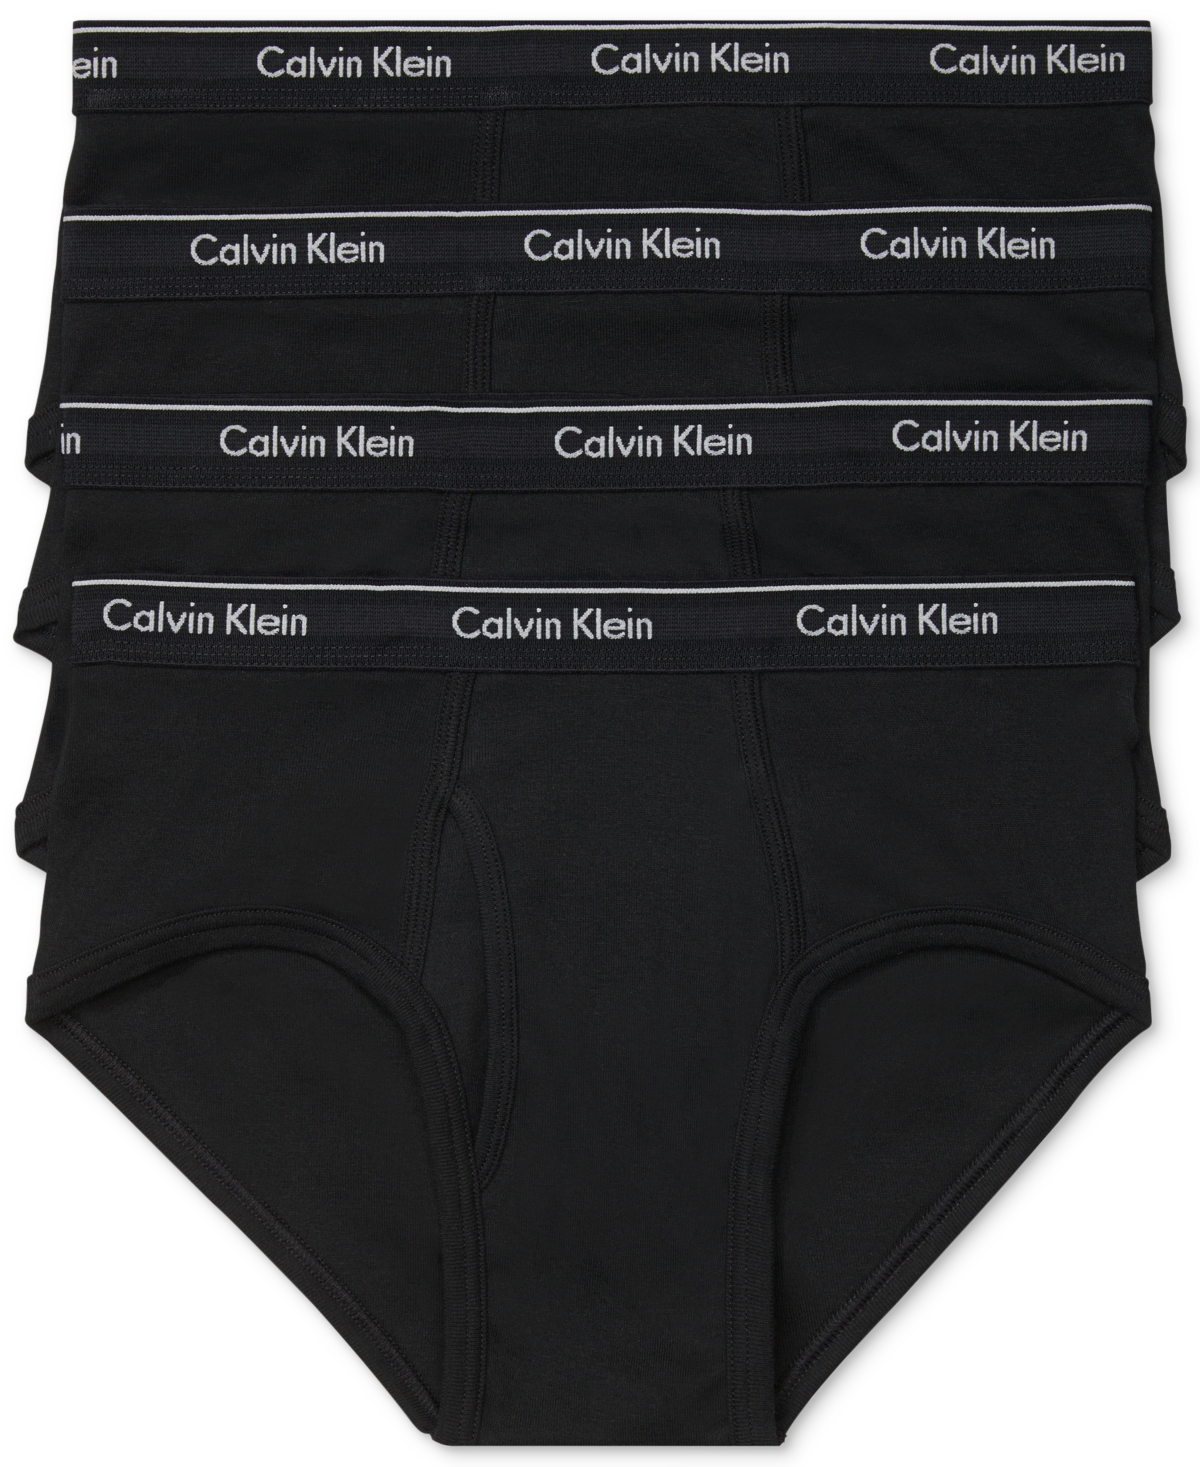 UPC 608926762646 product image for Calvin Klein Men's 4-Pack Cotton Classic Briefs | upcitemdb.com